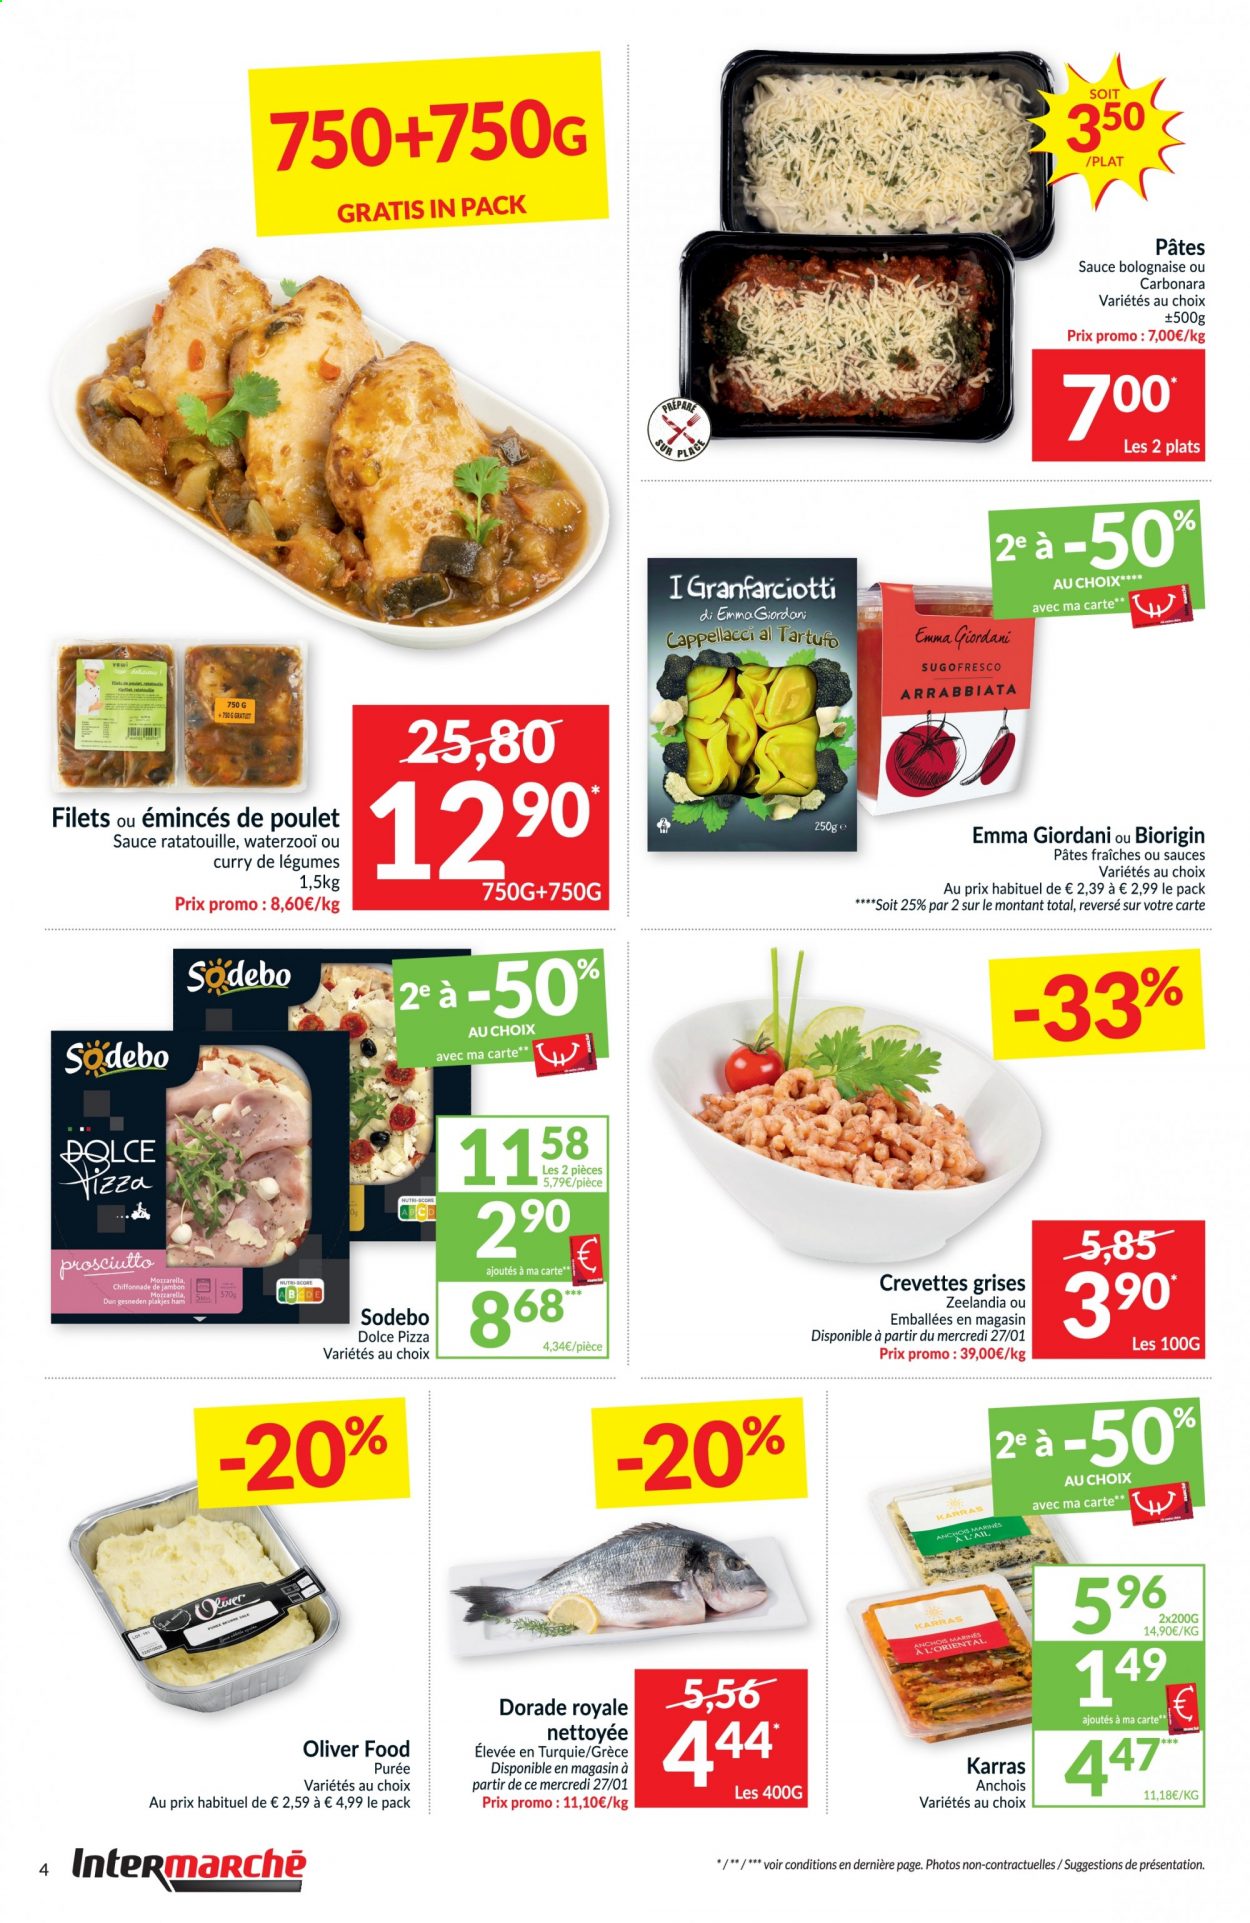 thumbnail - Intermarché-aanbieding - 26/01/2021 - 31/01/2021 -  producten in de aanbieding - ham, prosciutto, truffel, curry, mozzarella, pizza. Pagina 4.